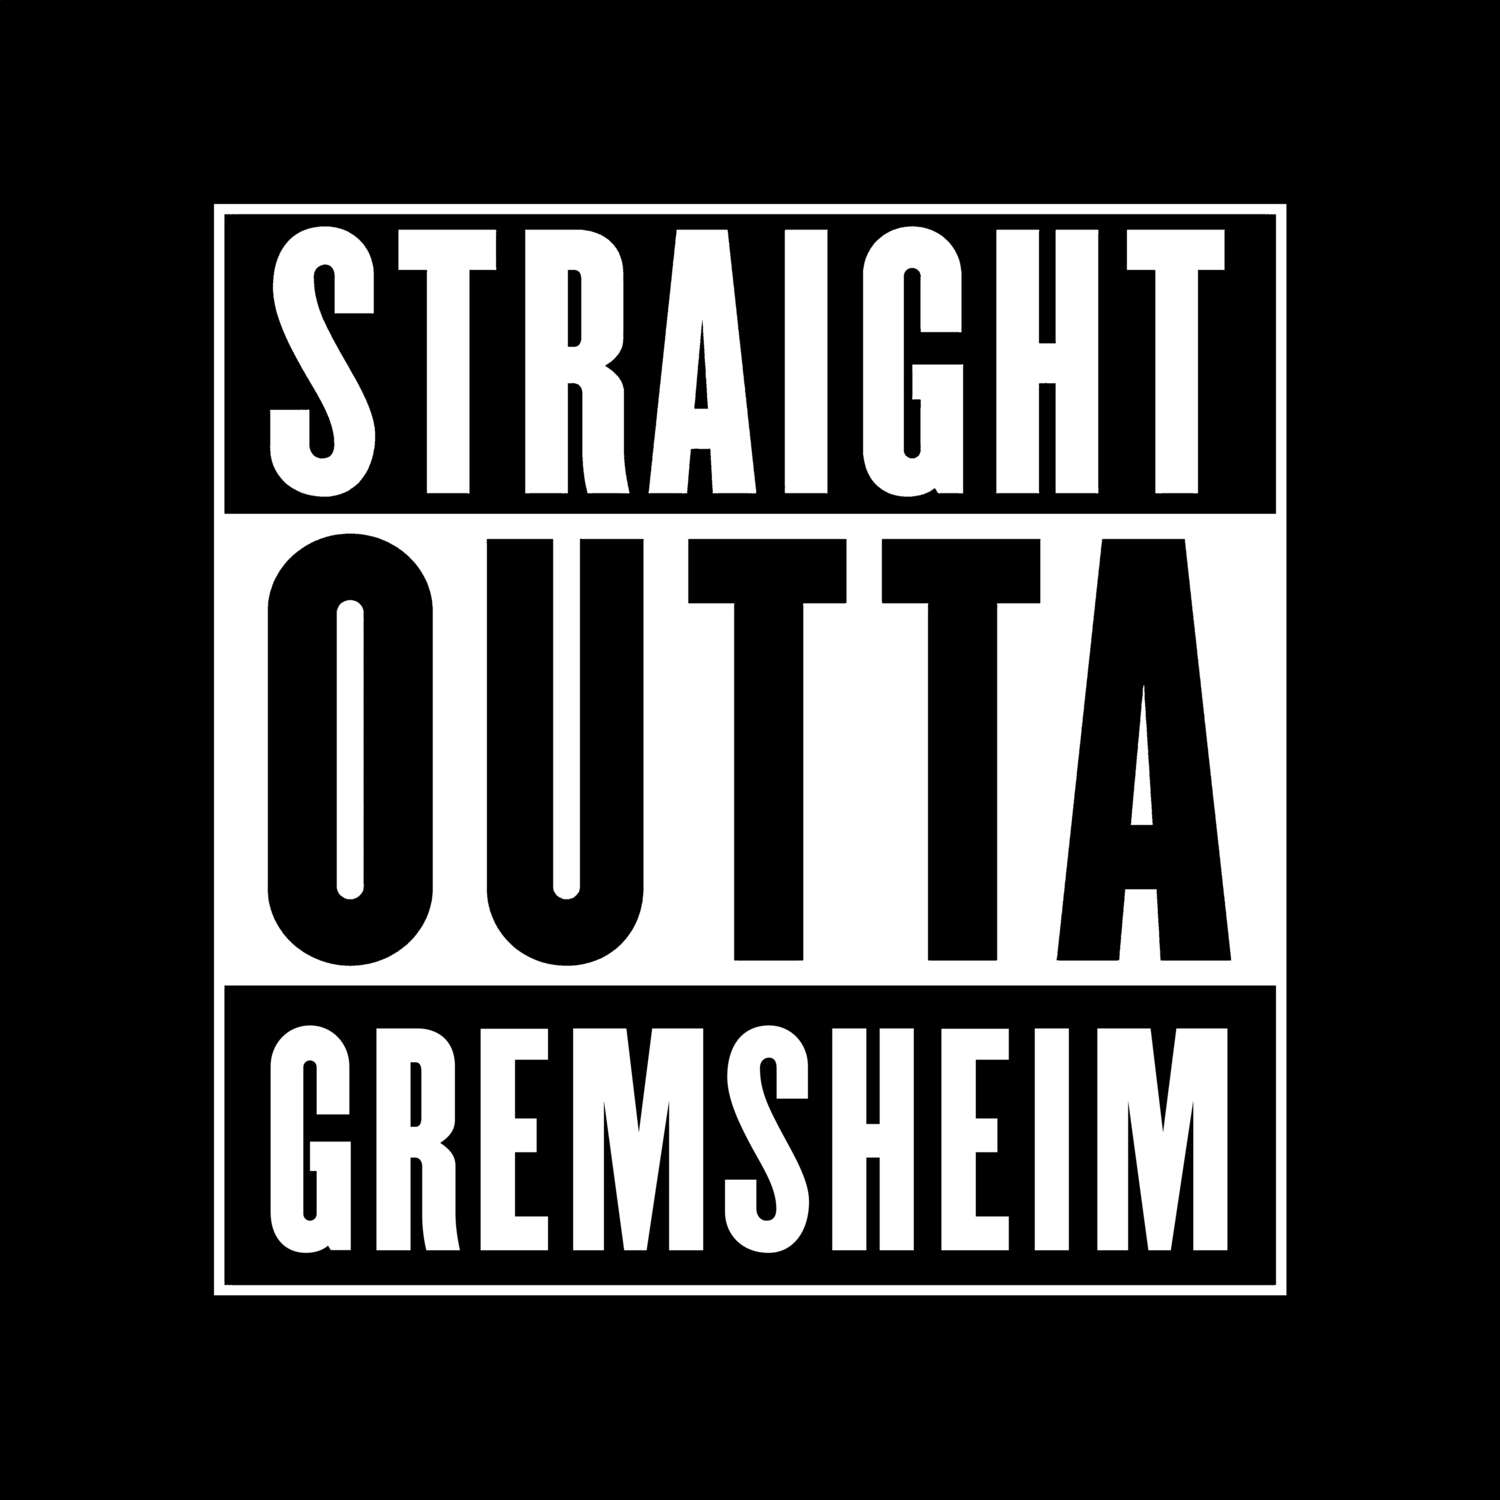 Gremsheim T-Shirt »Straight Outta«